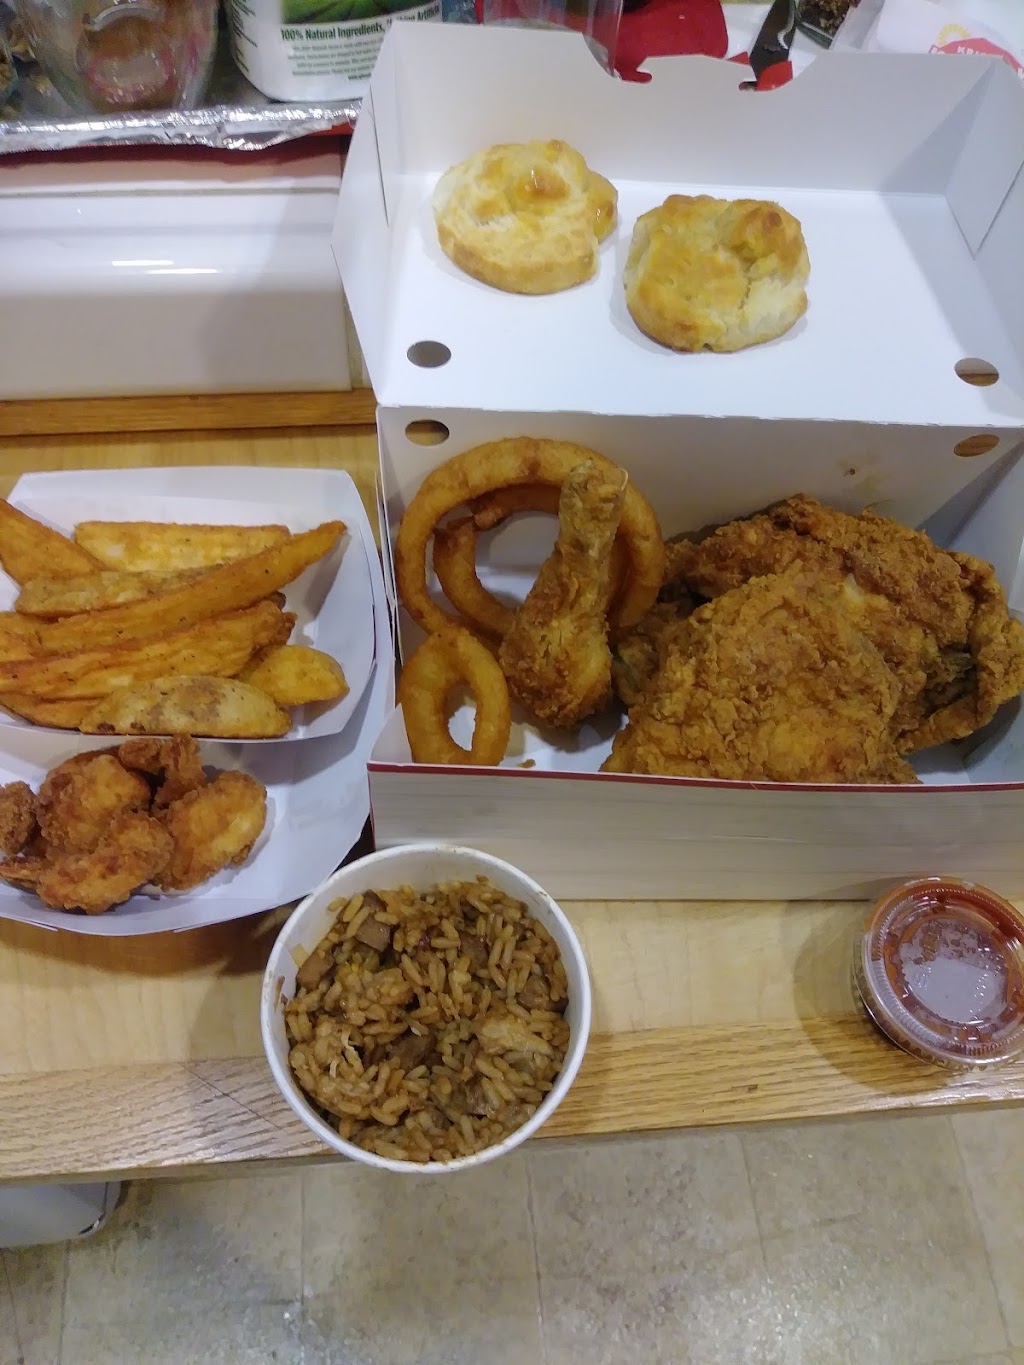 Krispy Krunchy Chicken | Truck & Auto Stop, 3940 N Tracy Blvd, Tracy, CA 95304 | Phone: (209) 832-5006